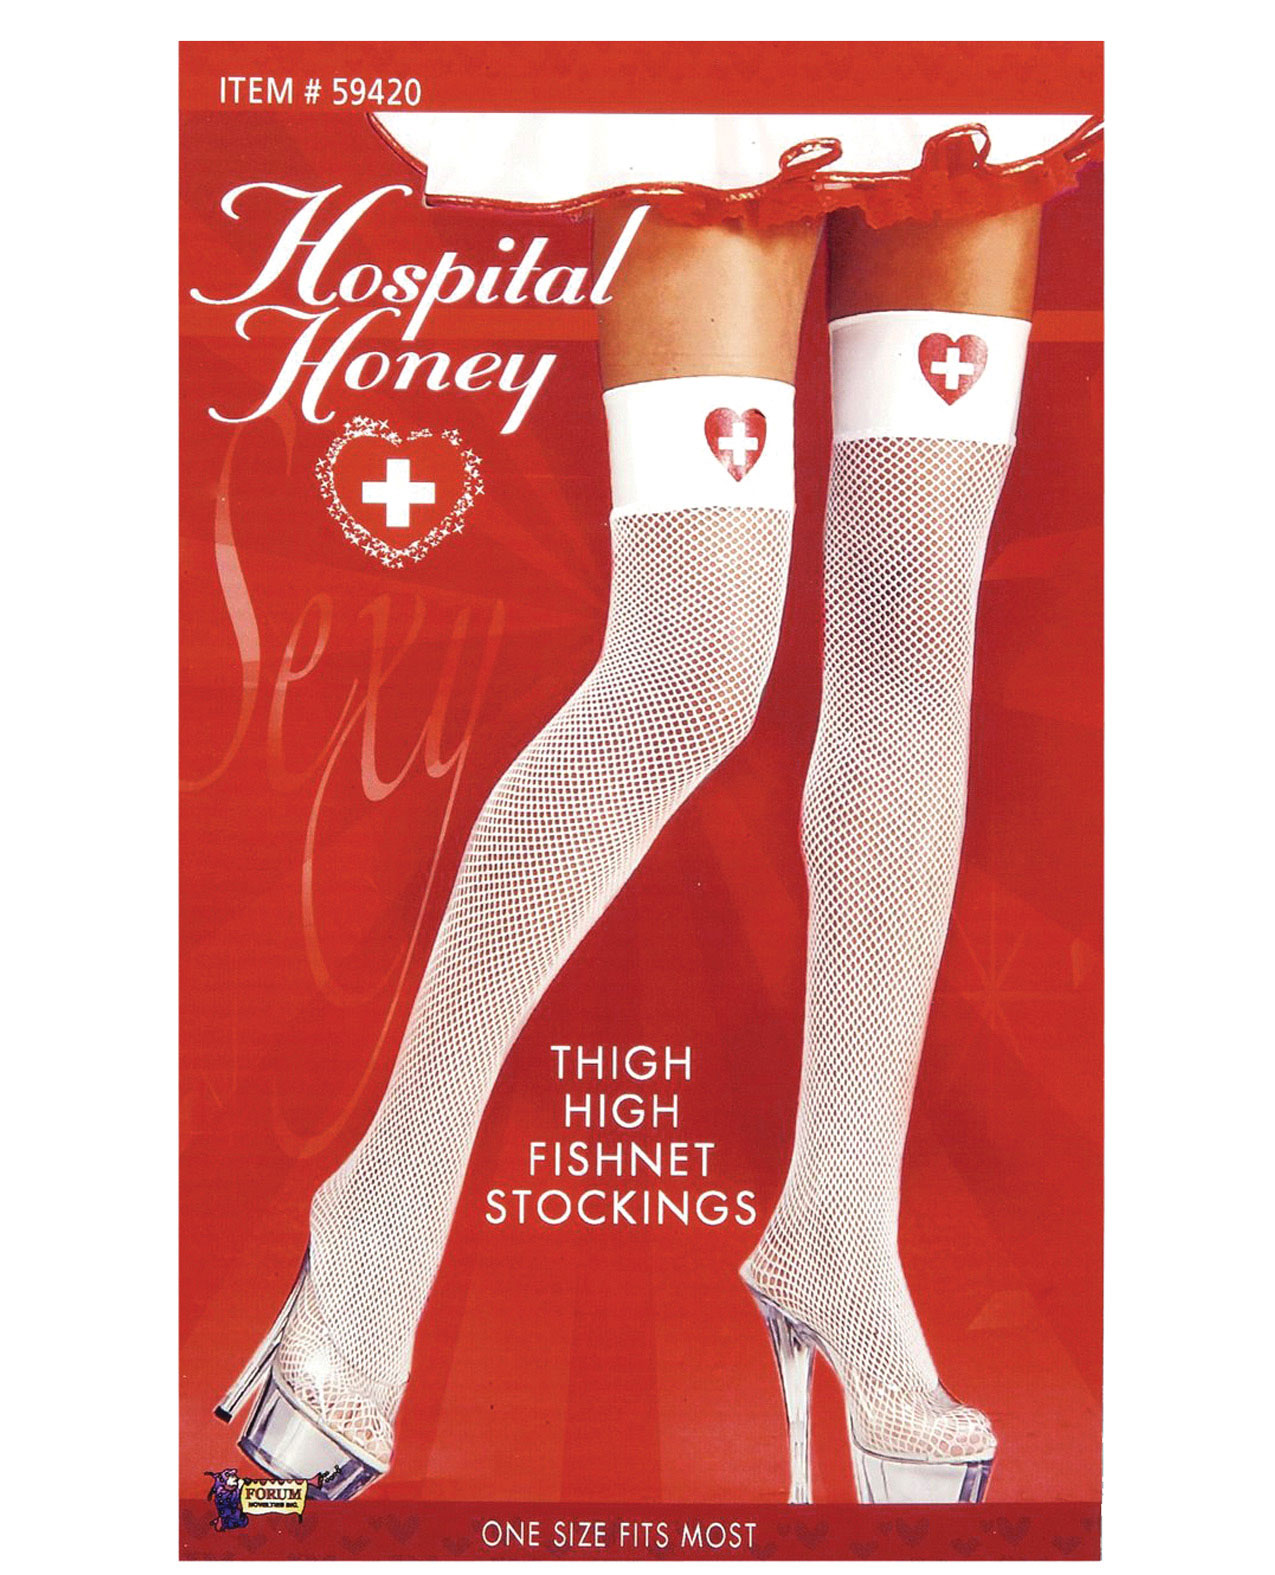 Forum Novelties Inc Women's Hospital Honey Nurse Thigh High Stockings - One Size